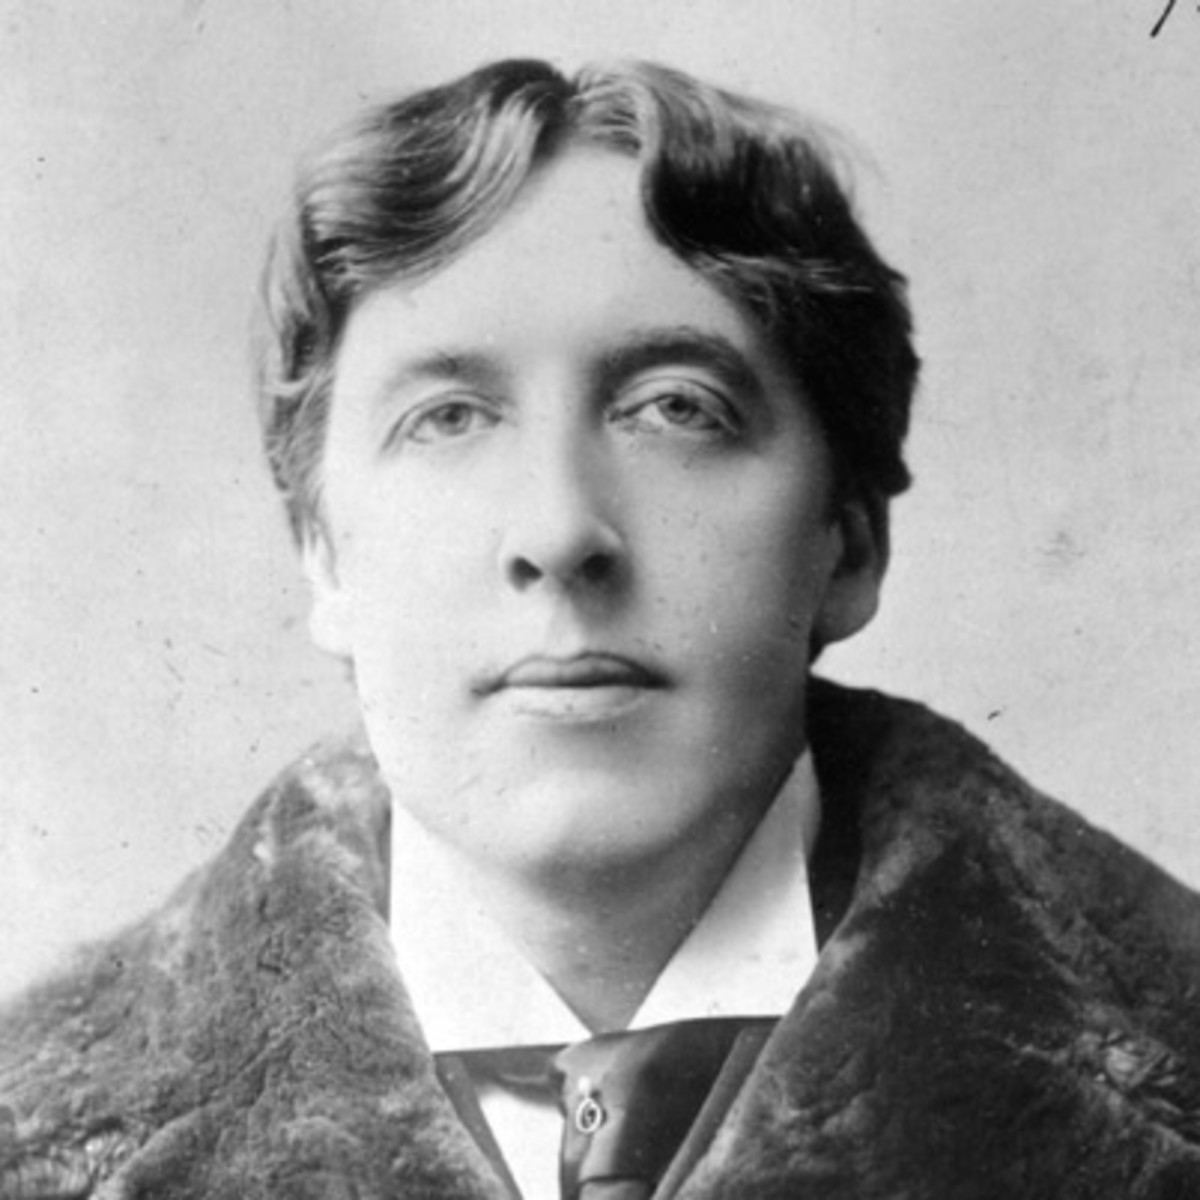 Oscar Wilde was also left-handed.